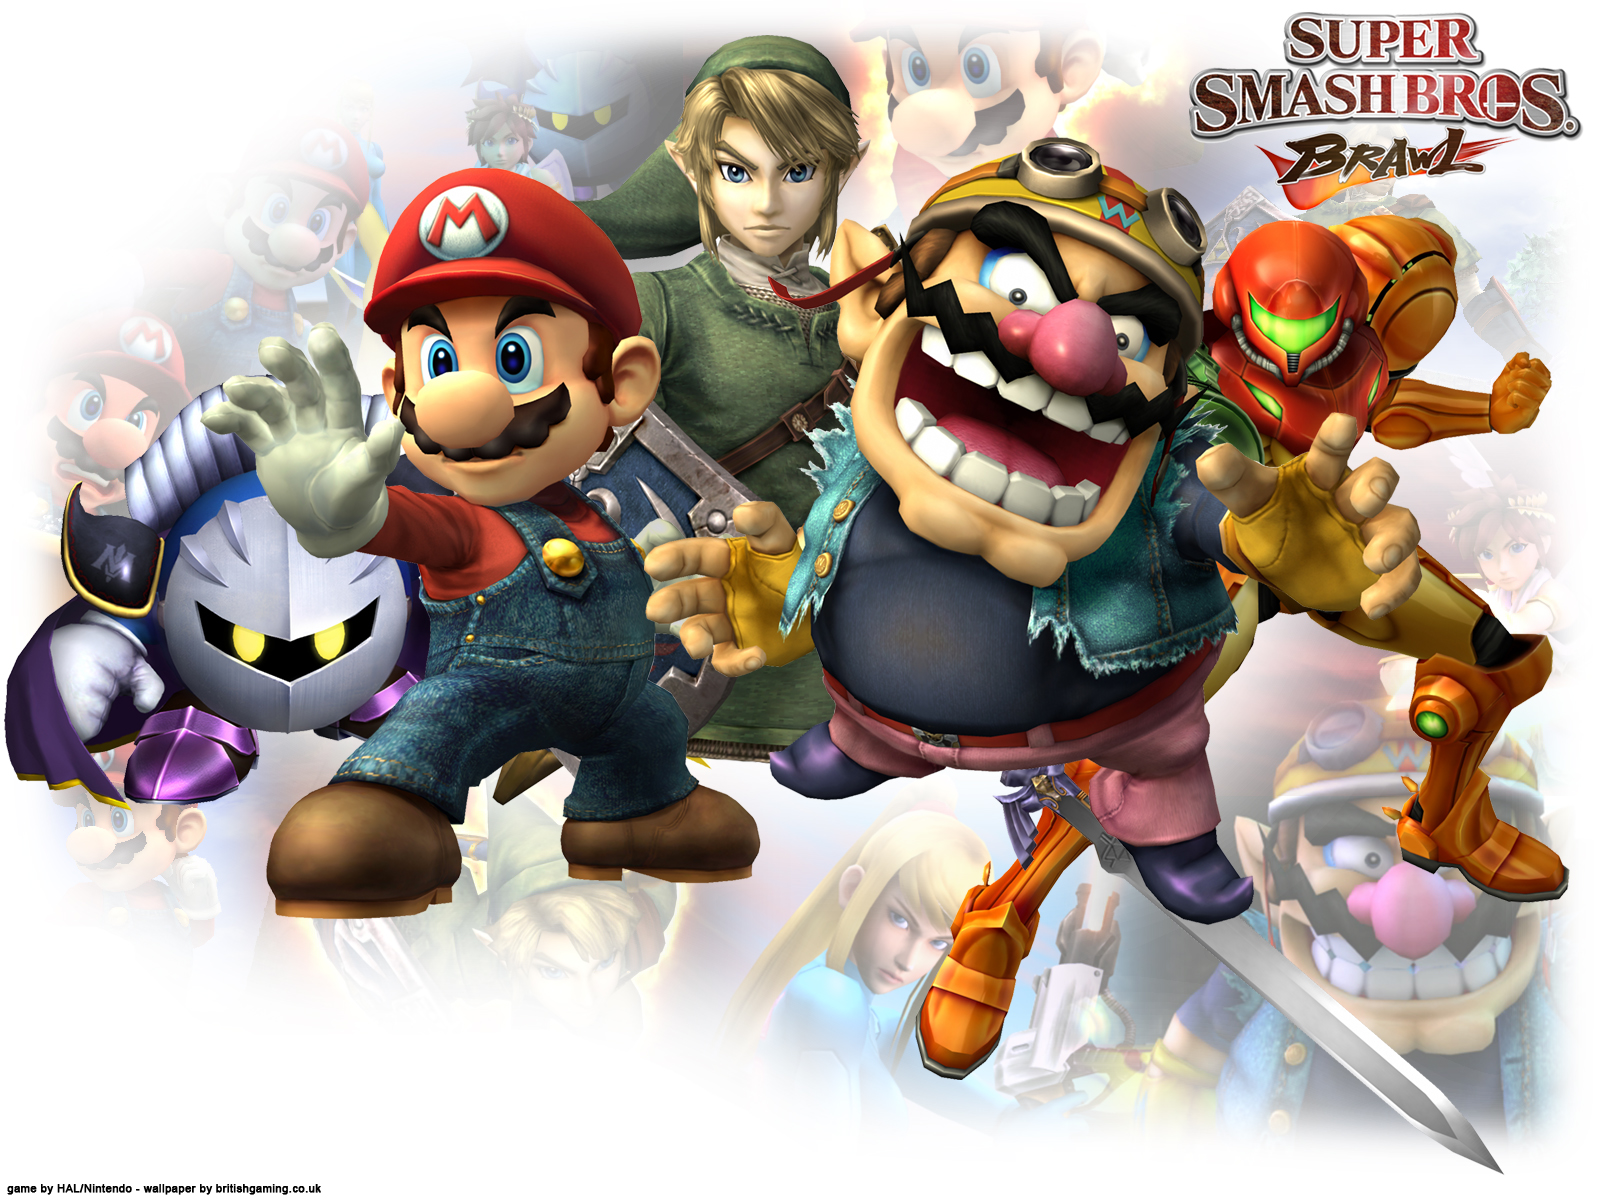 Video game characters including Link, Meta Knight, Mario, Wario, and Samus Aran.